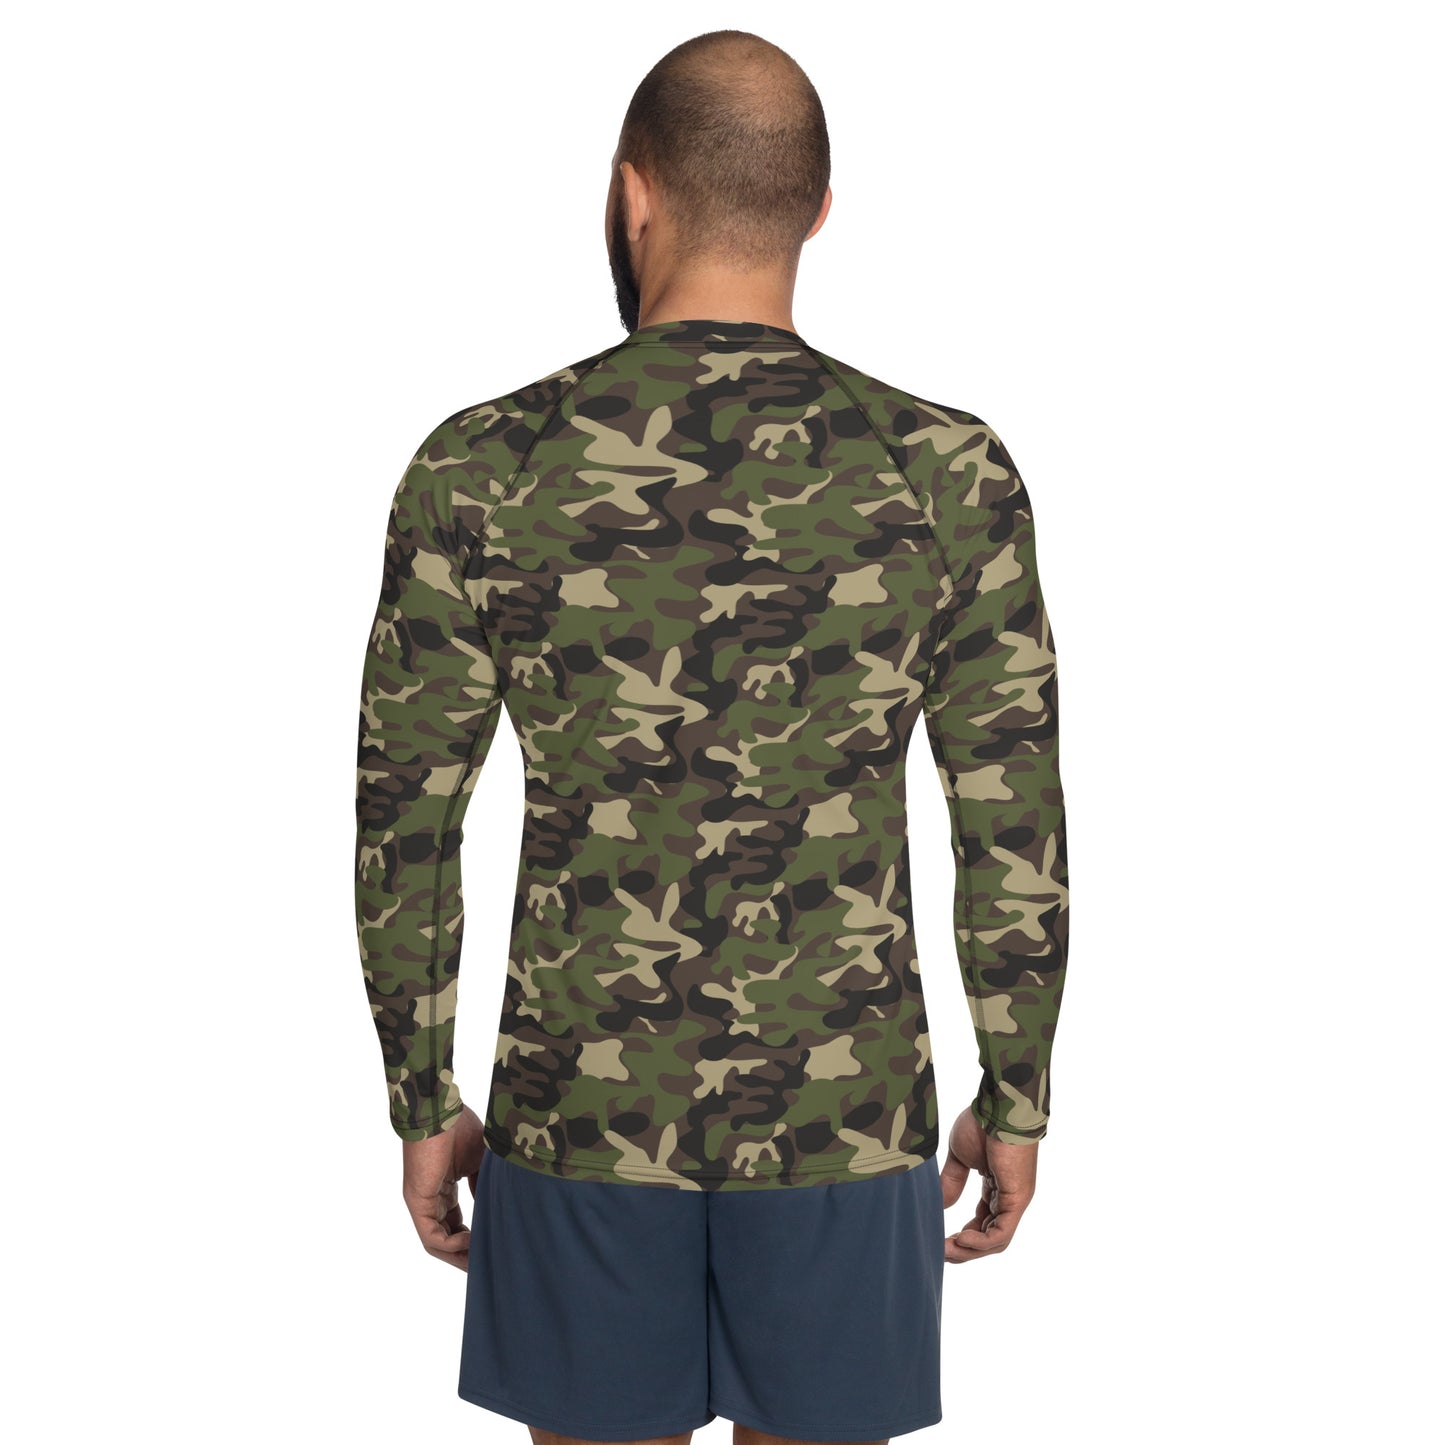 Camo Men Rash Guard, Green Camouflage Print Surf Long Sleeve Swim Shirt Swimwear Sun Beach Designer Wet Suit Army Protection 40 UPF Starcove Fashion